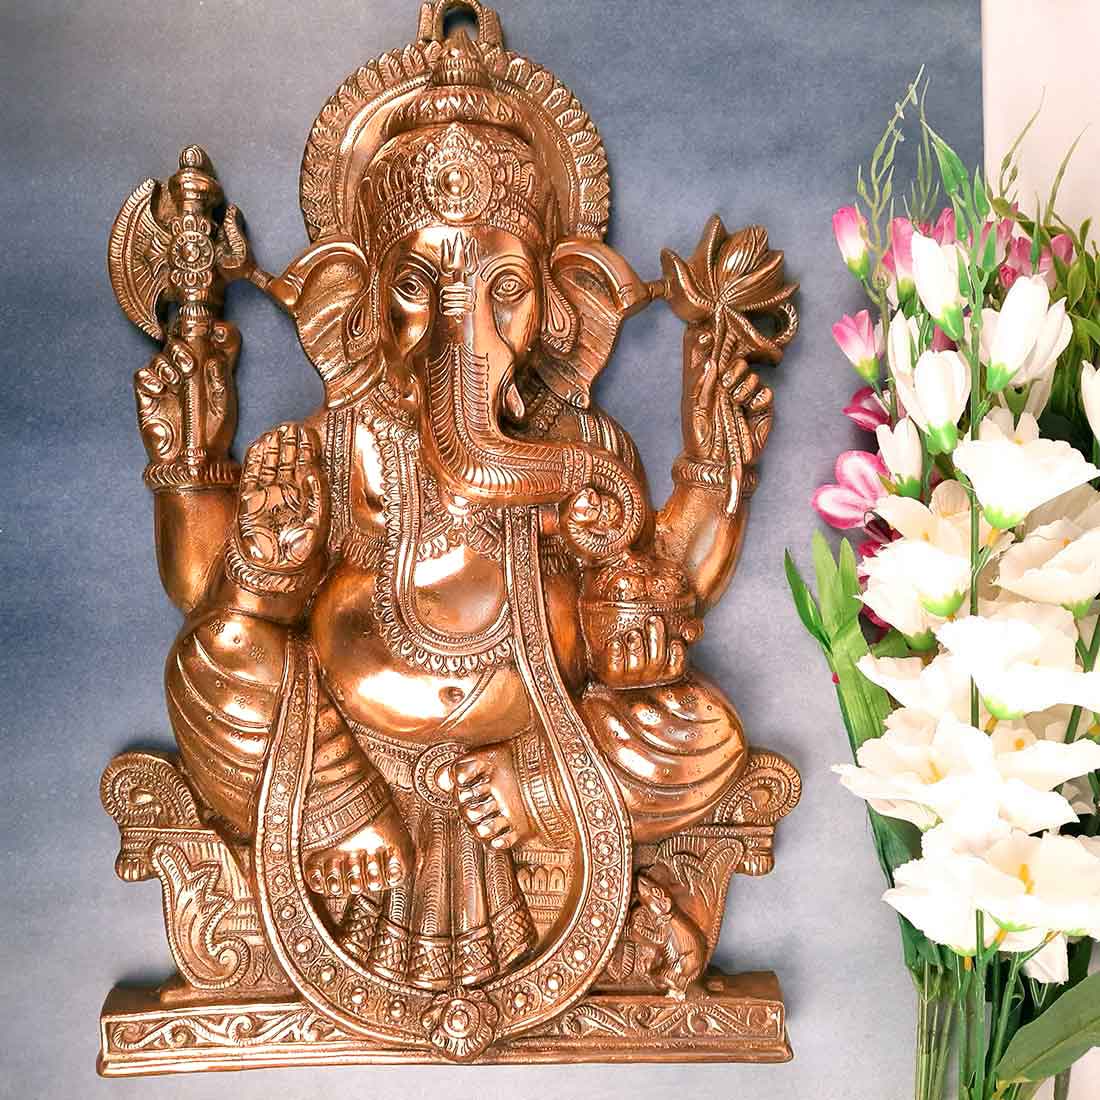 Ganesh Wall Hanging Idol Big | Lord Ganesha Statue Wall Art - For Puja, Home & Main Gate |Religoius & Spiritual Decor for Living Room - 23 Inch